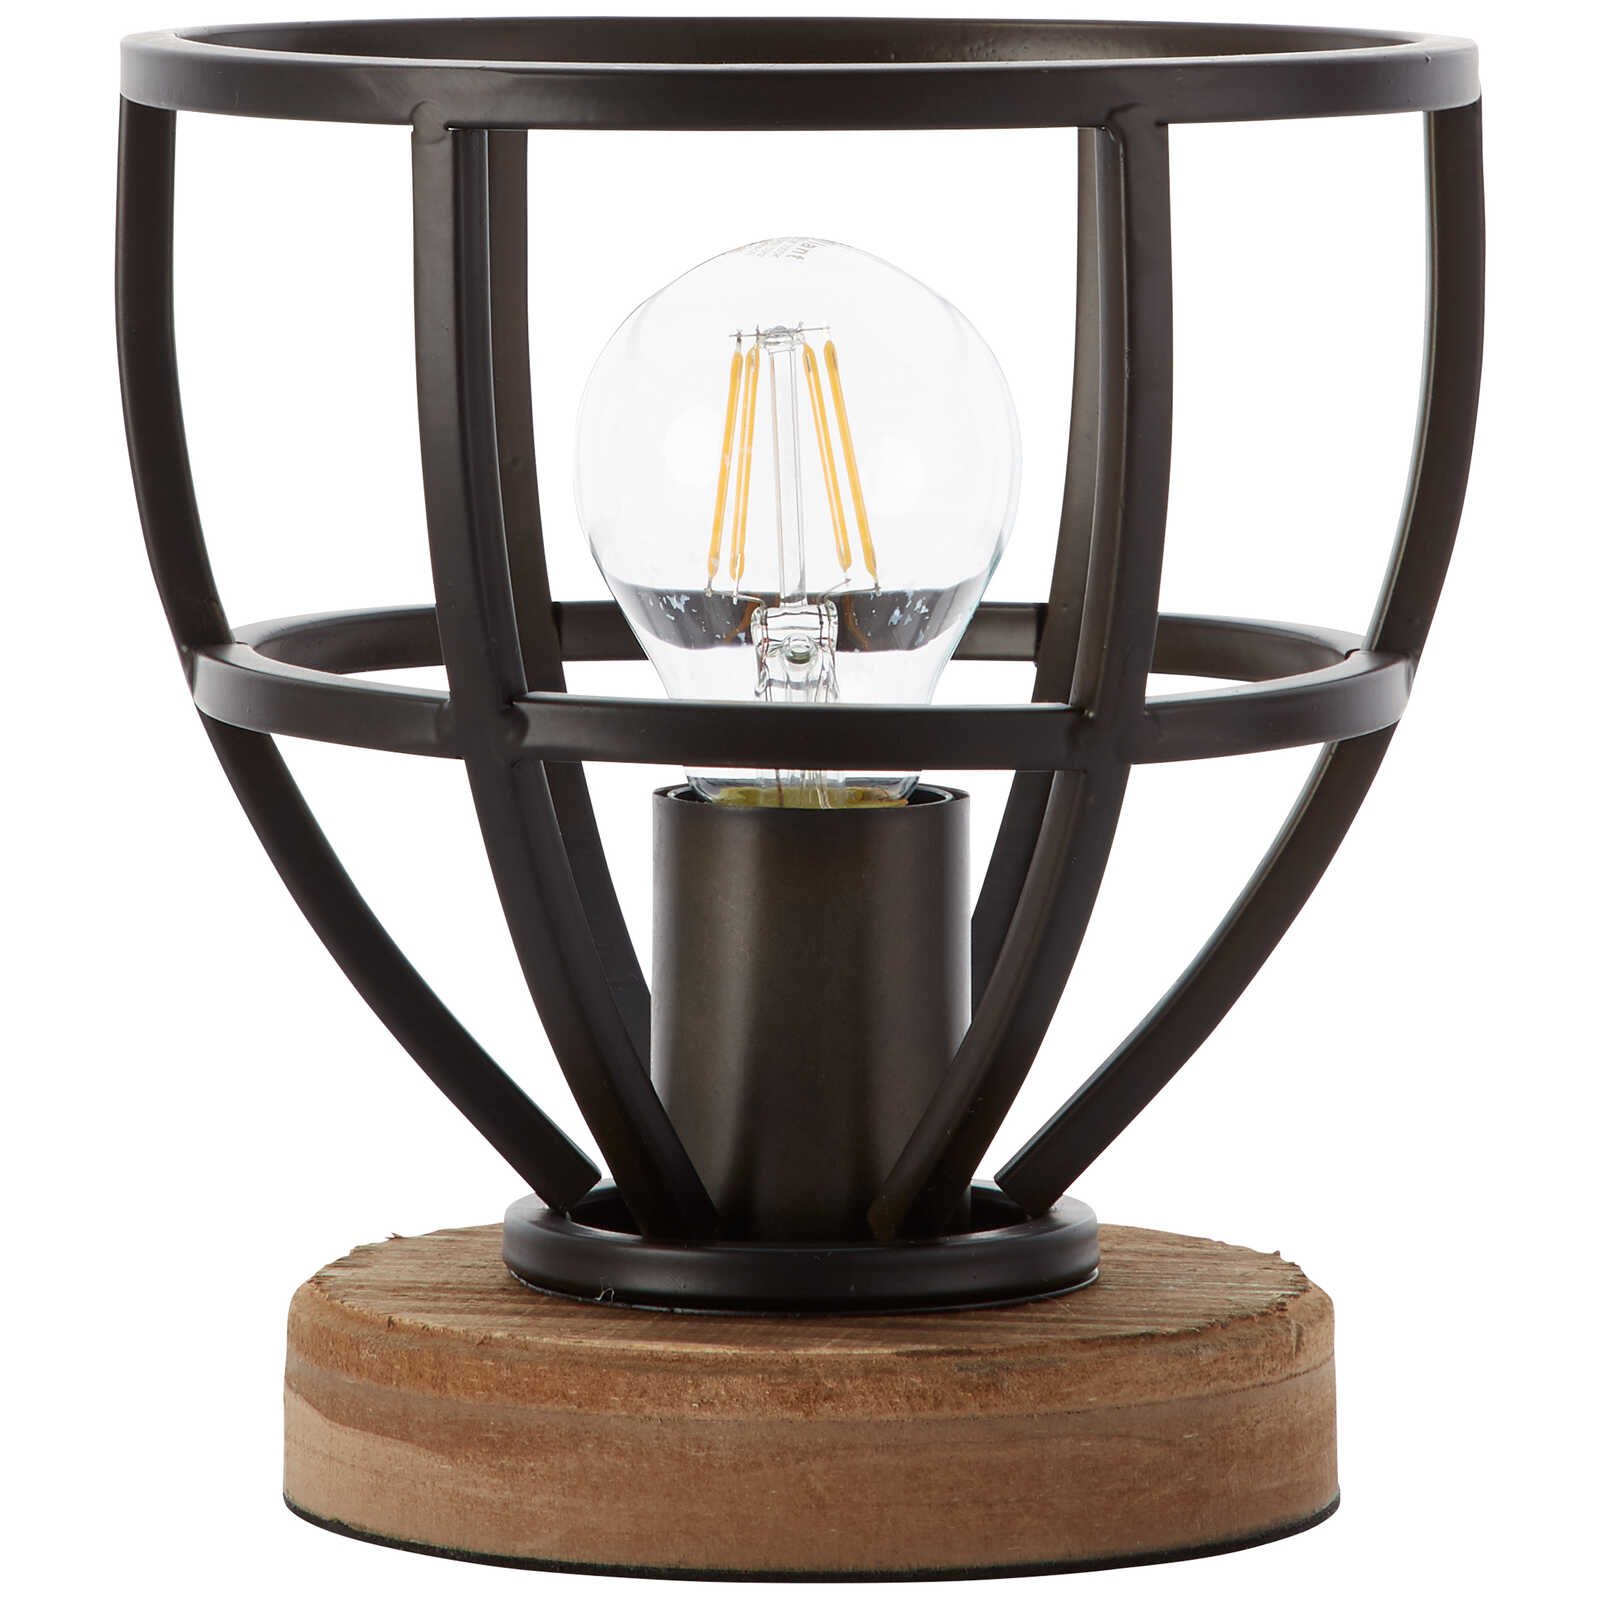             Wooden table lamp - Leonie 8 - Black
        